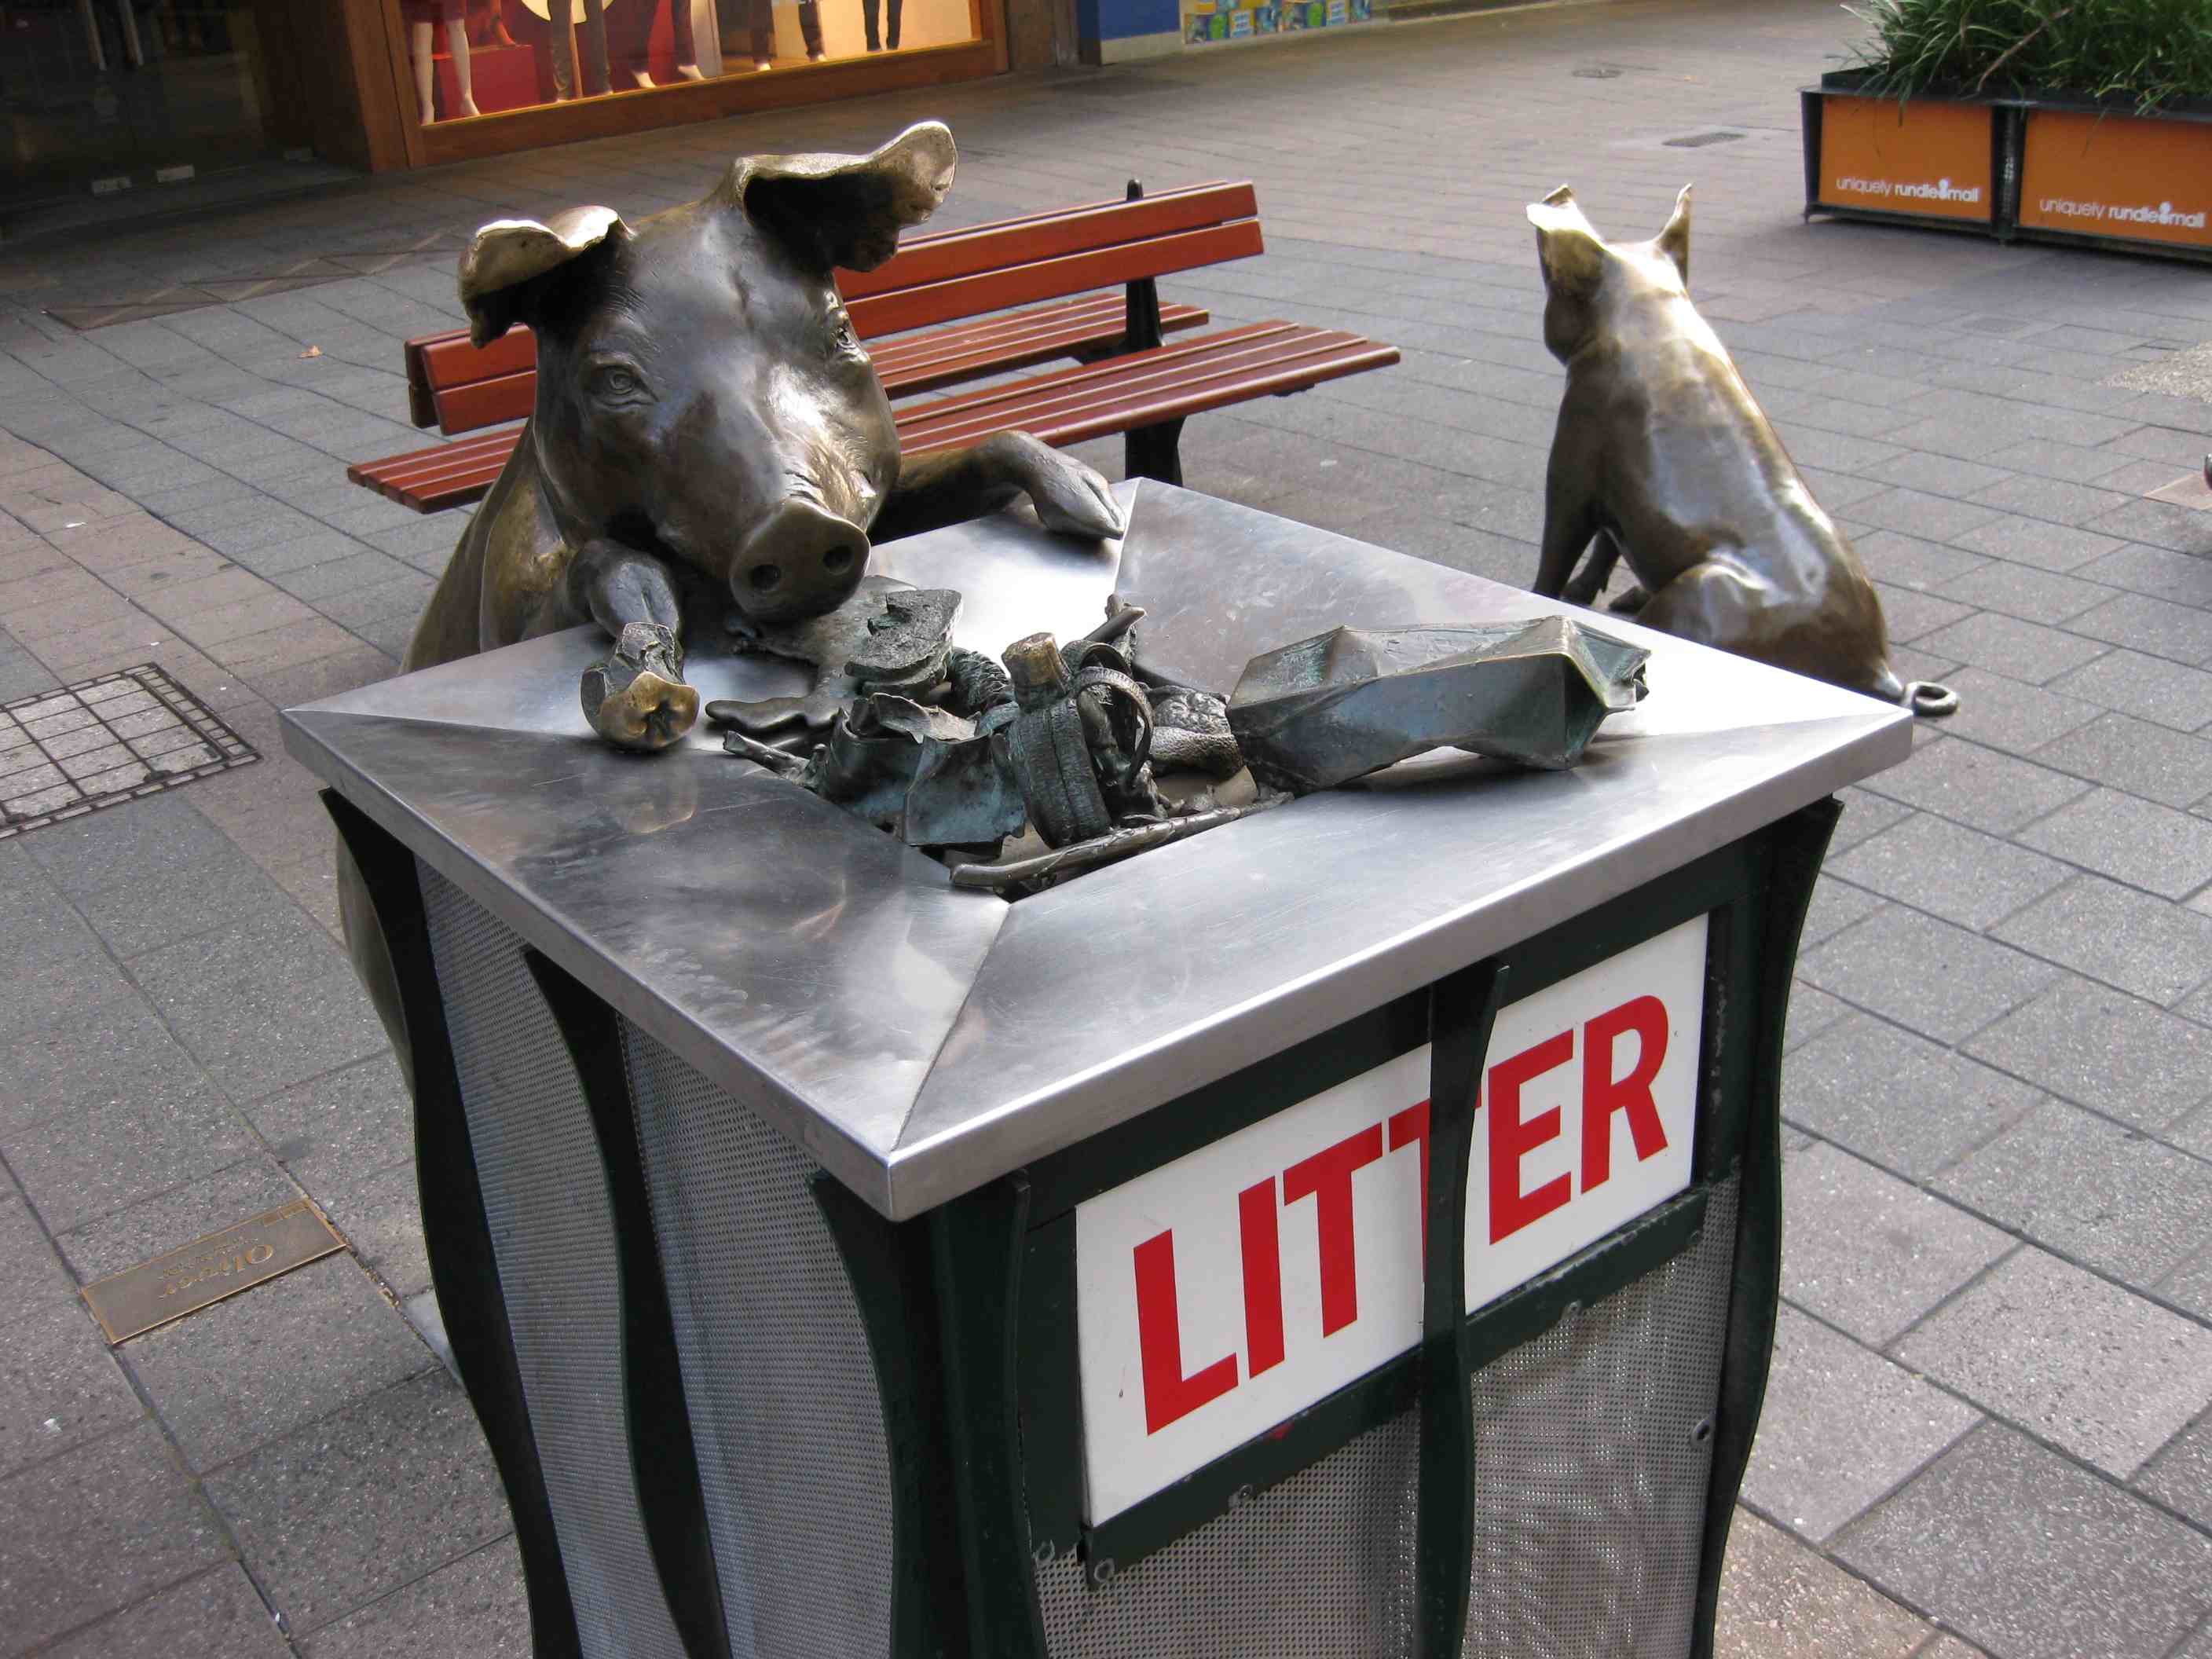 Litter pigs in Adelaide